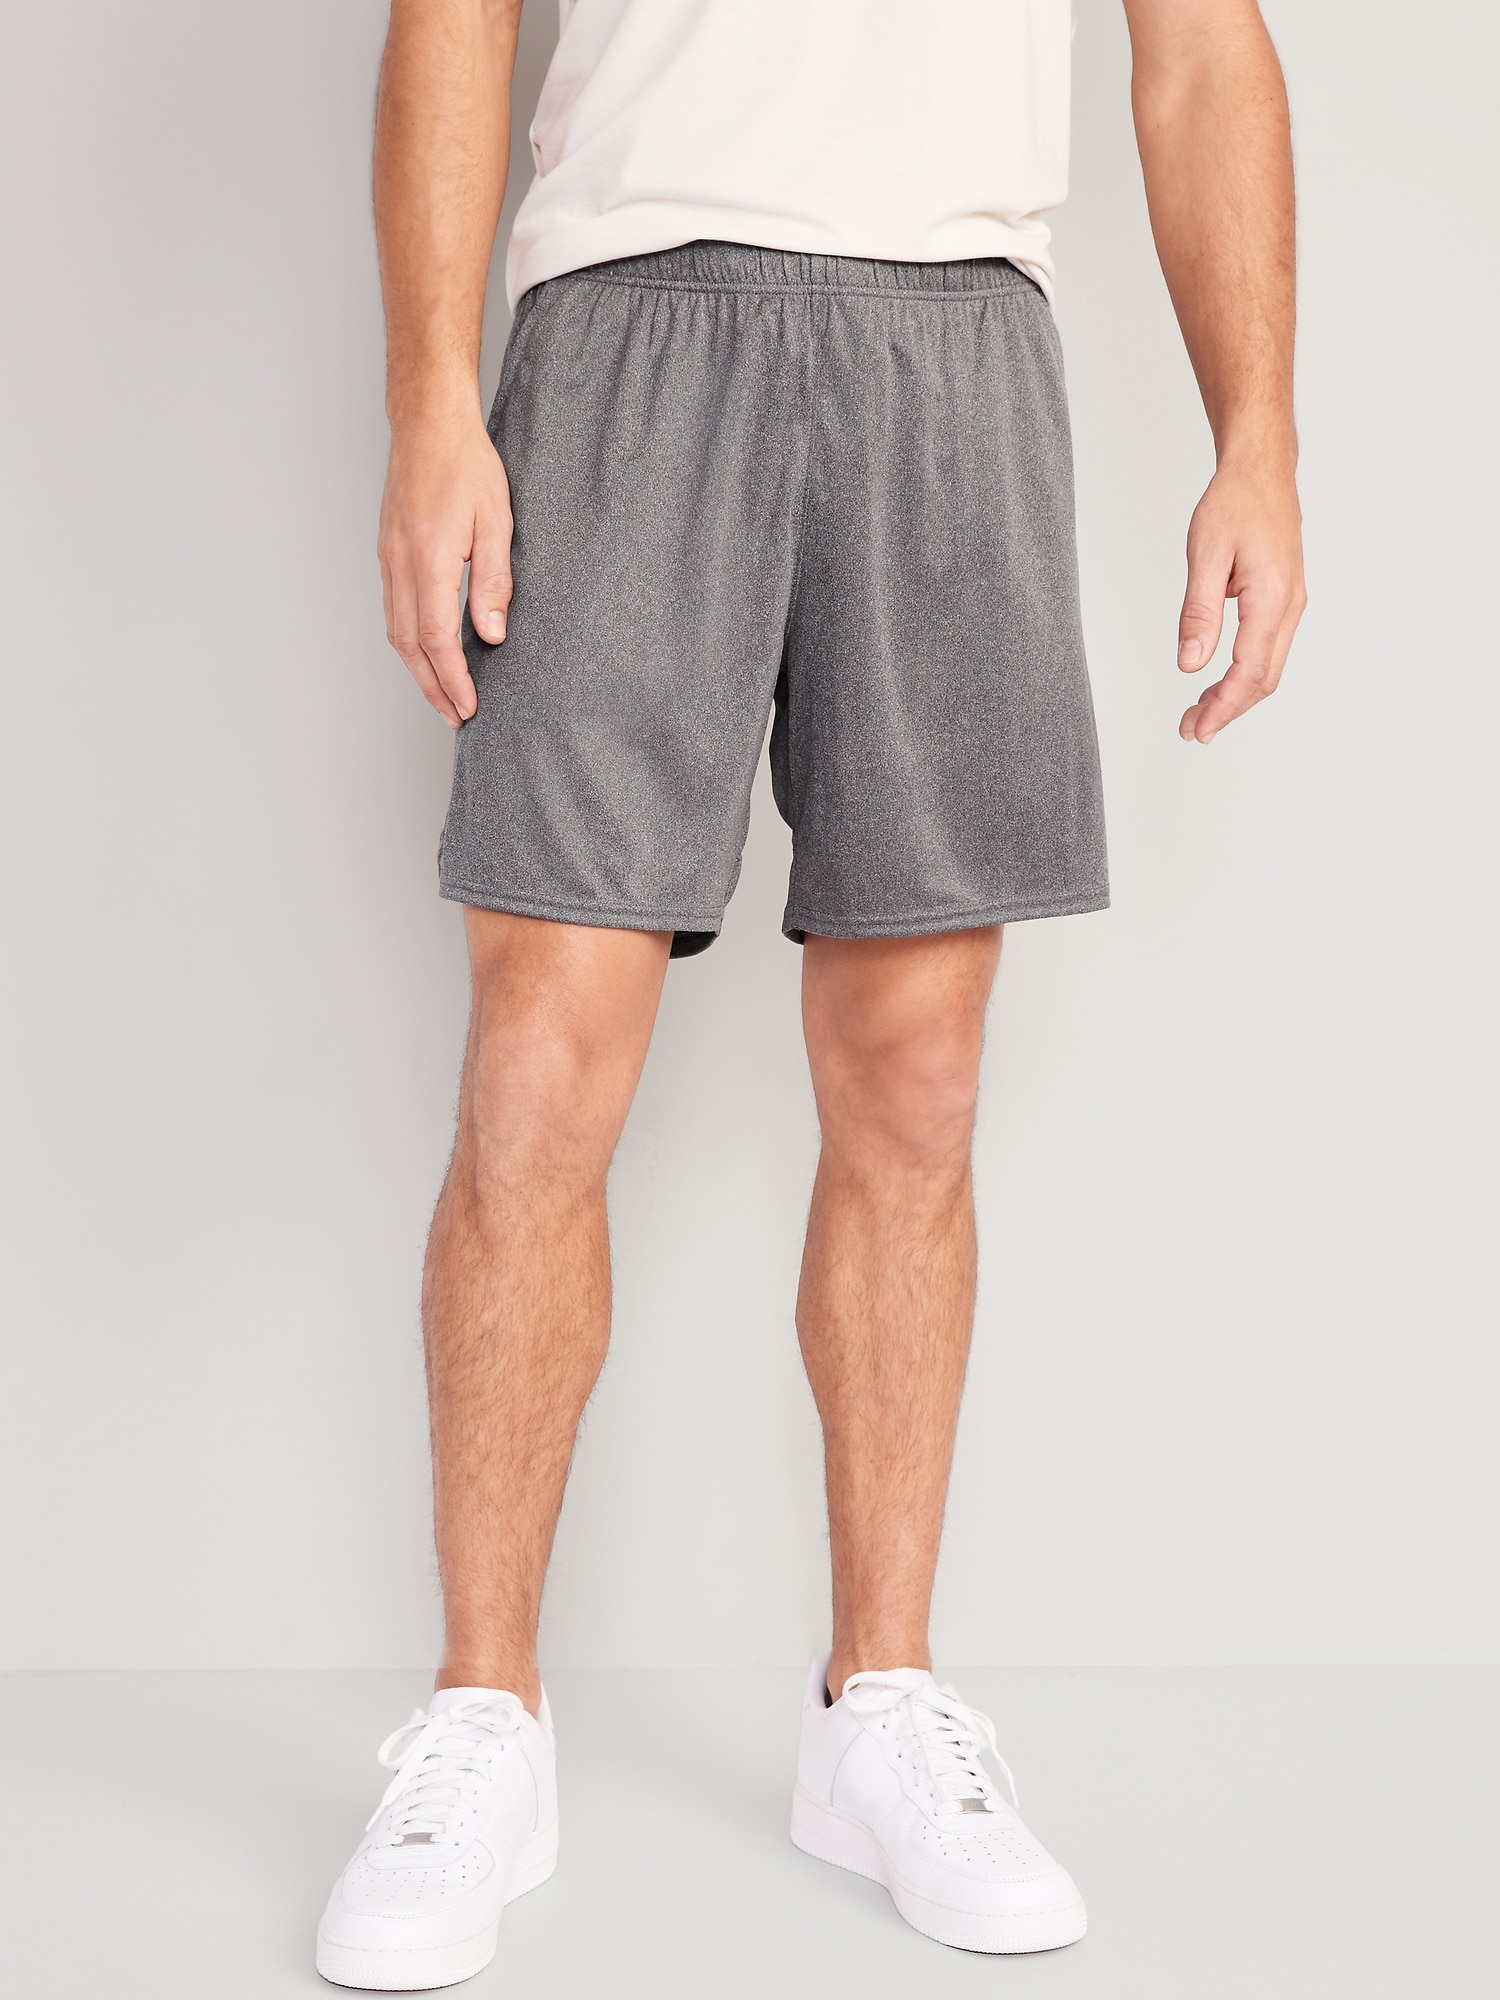 Old Navy Go-Dry Mesh Basketball Shorts for Men -- 7-inch inseam gray. 1